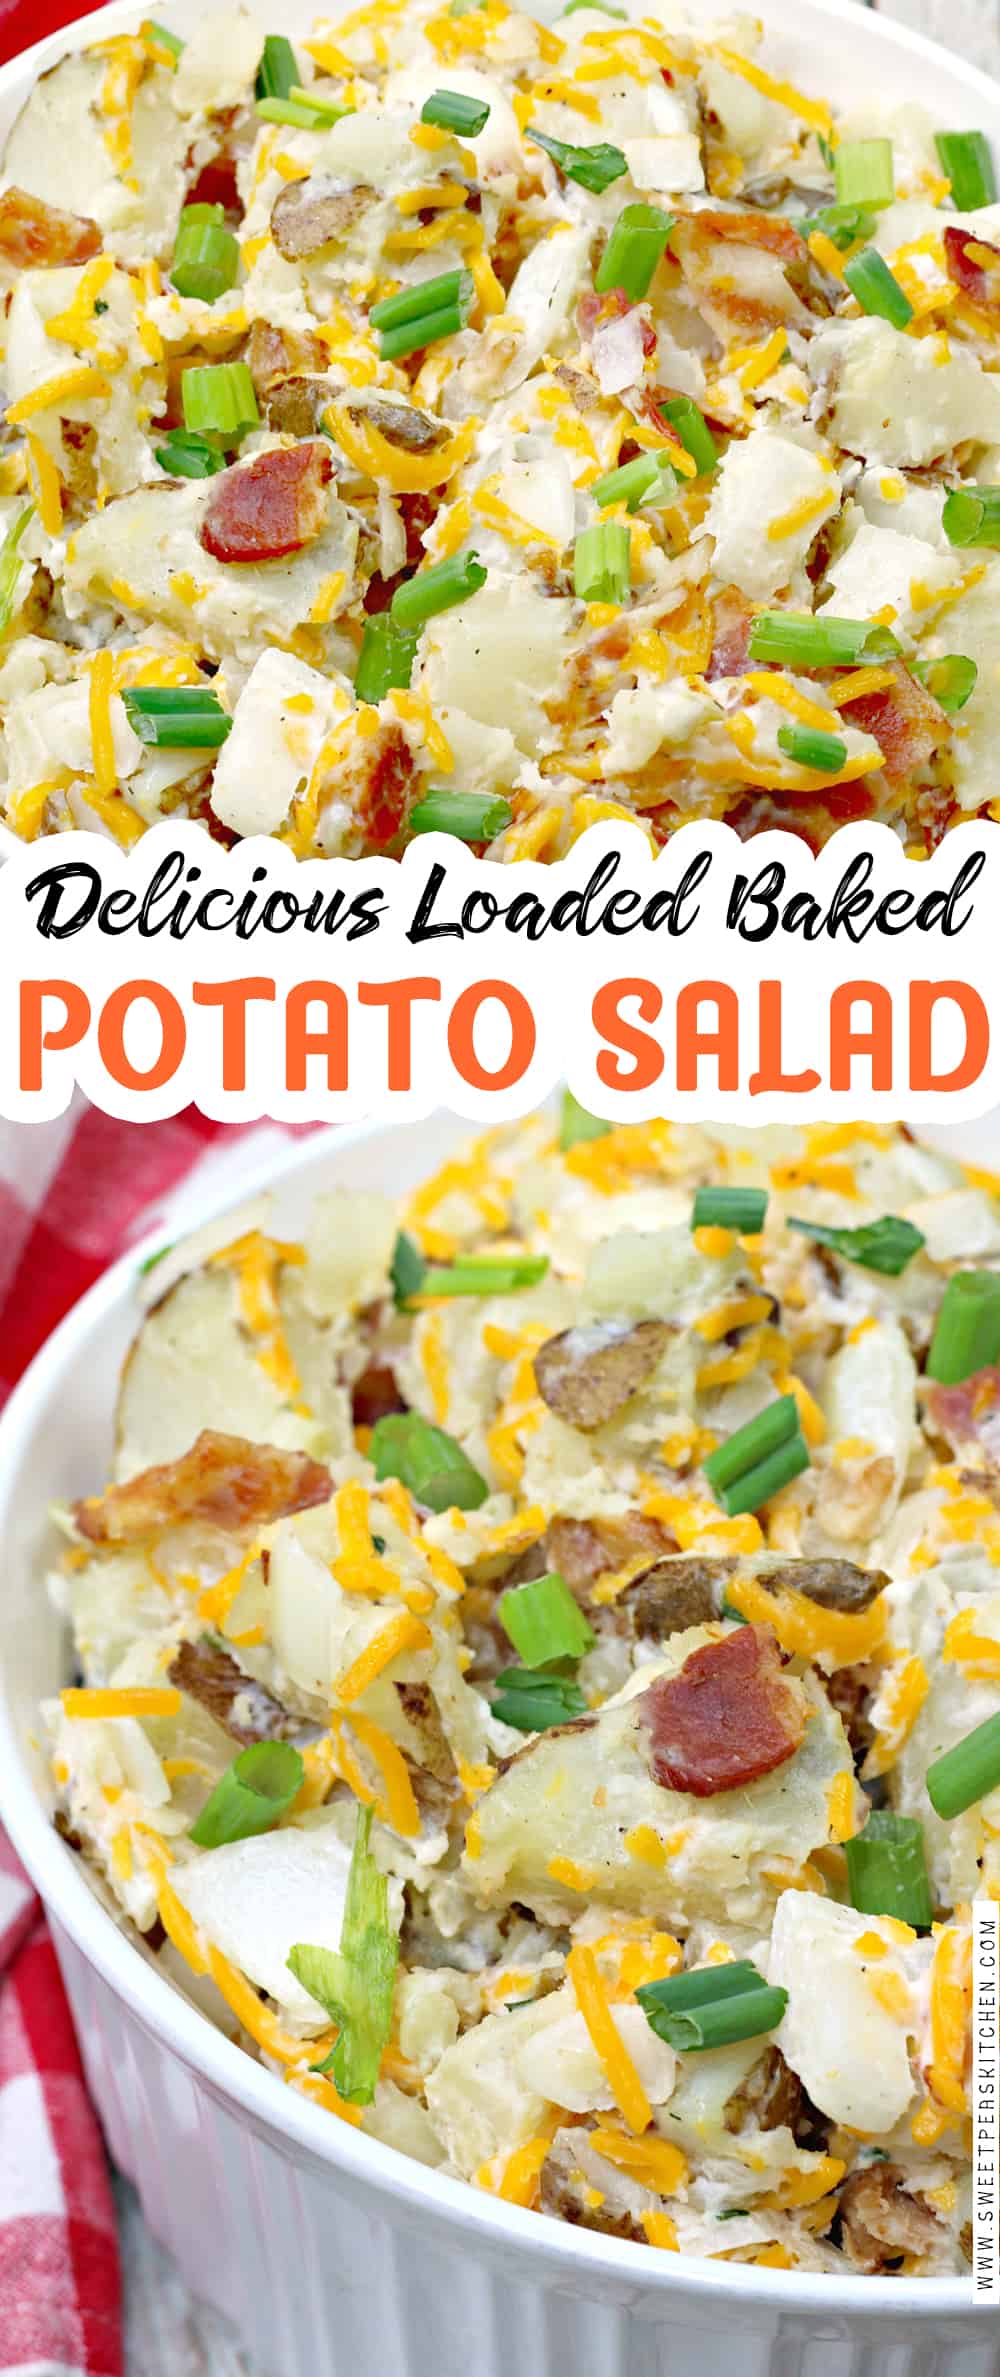 Loaded Baked Potato Salad